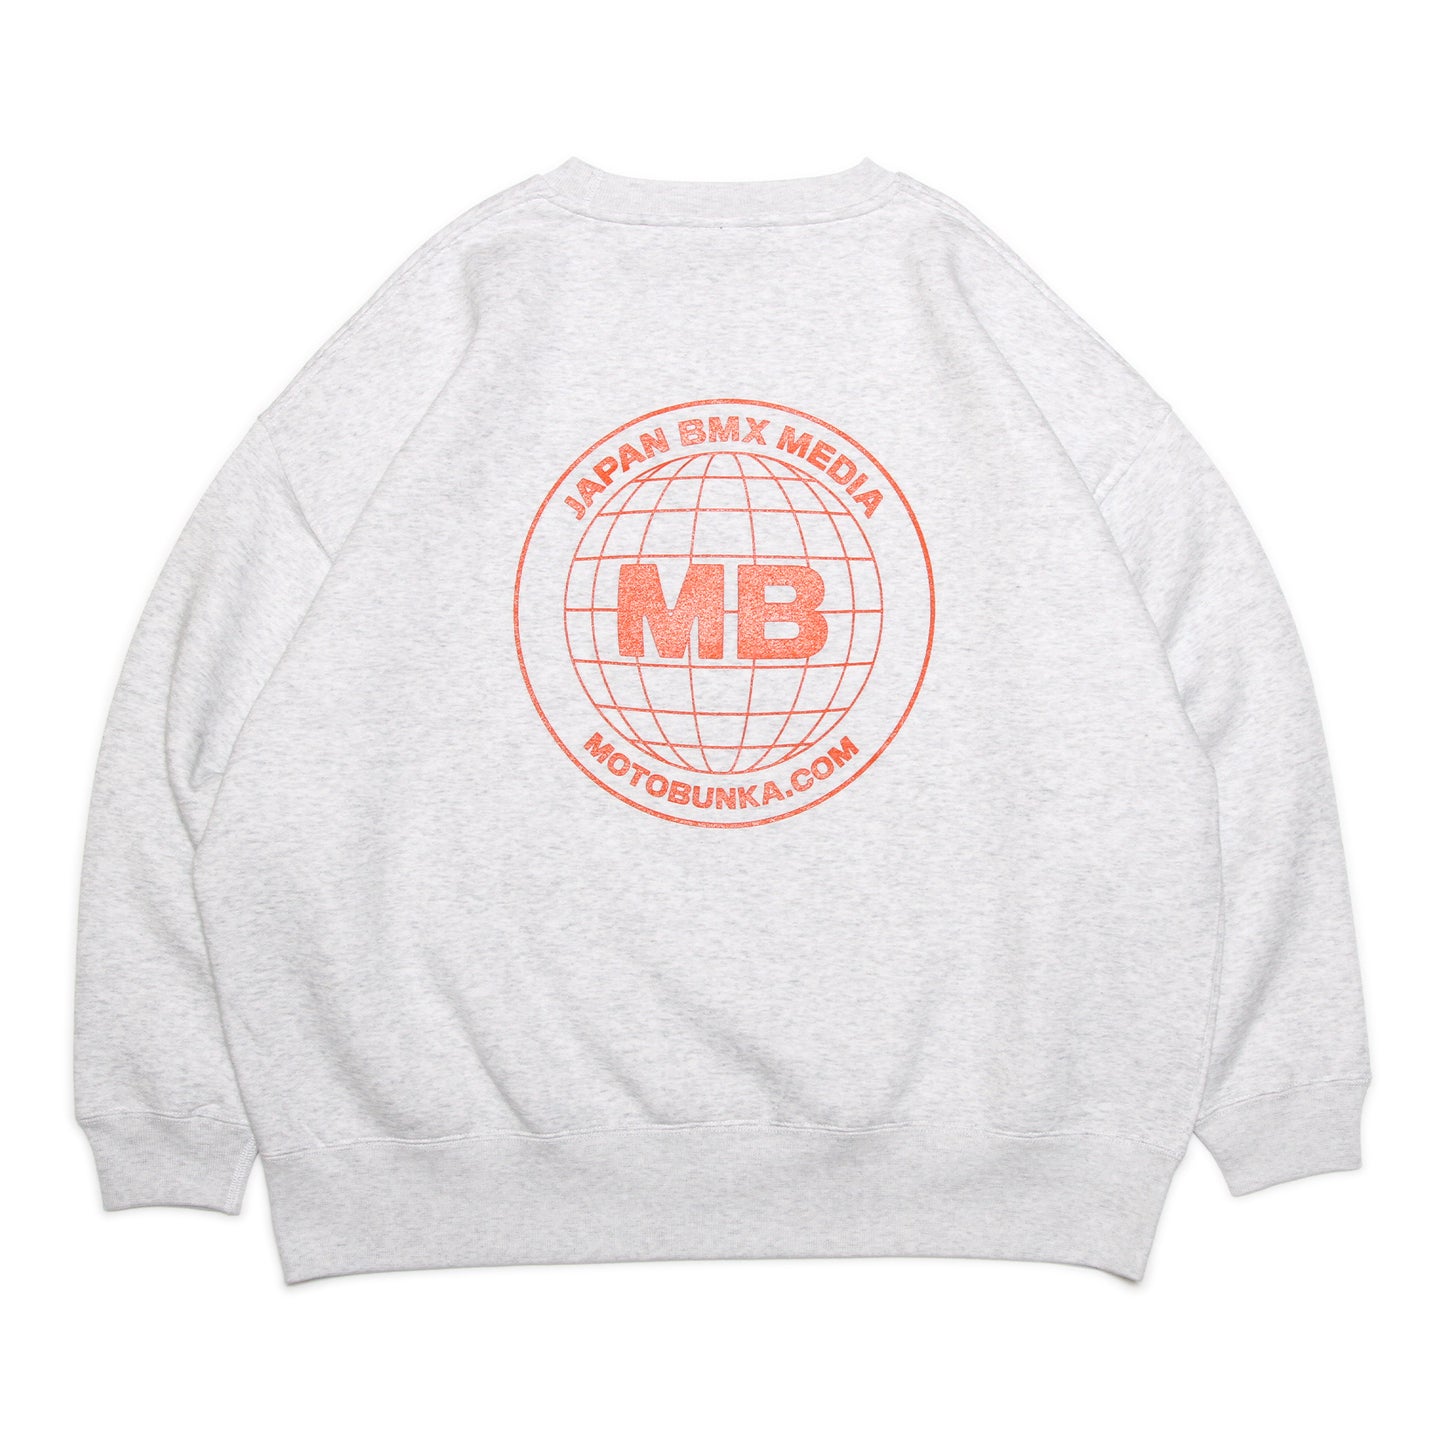 MOTO-BUNKA - JBM 23 Sweatshirt/Ash Grey-Orange